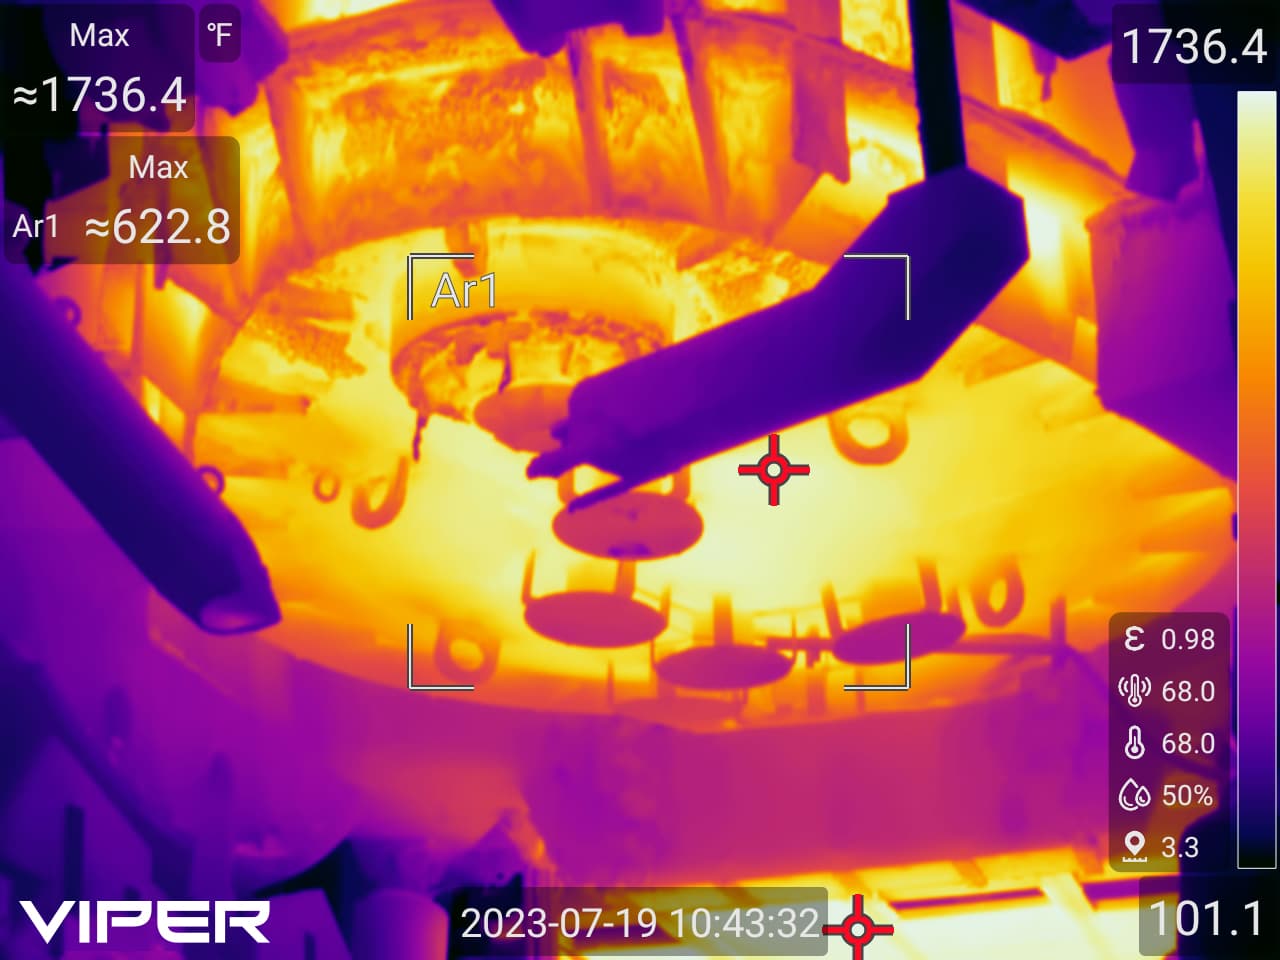 Viper PG384 for infrared inspection - steel mill